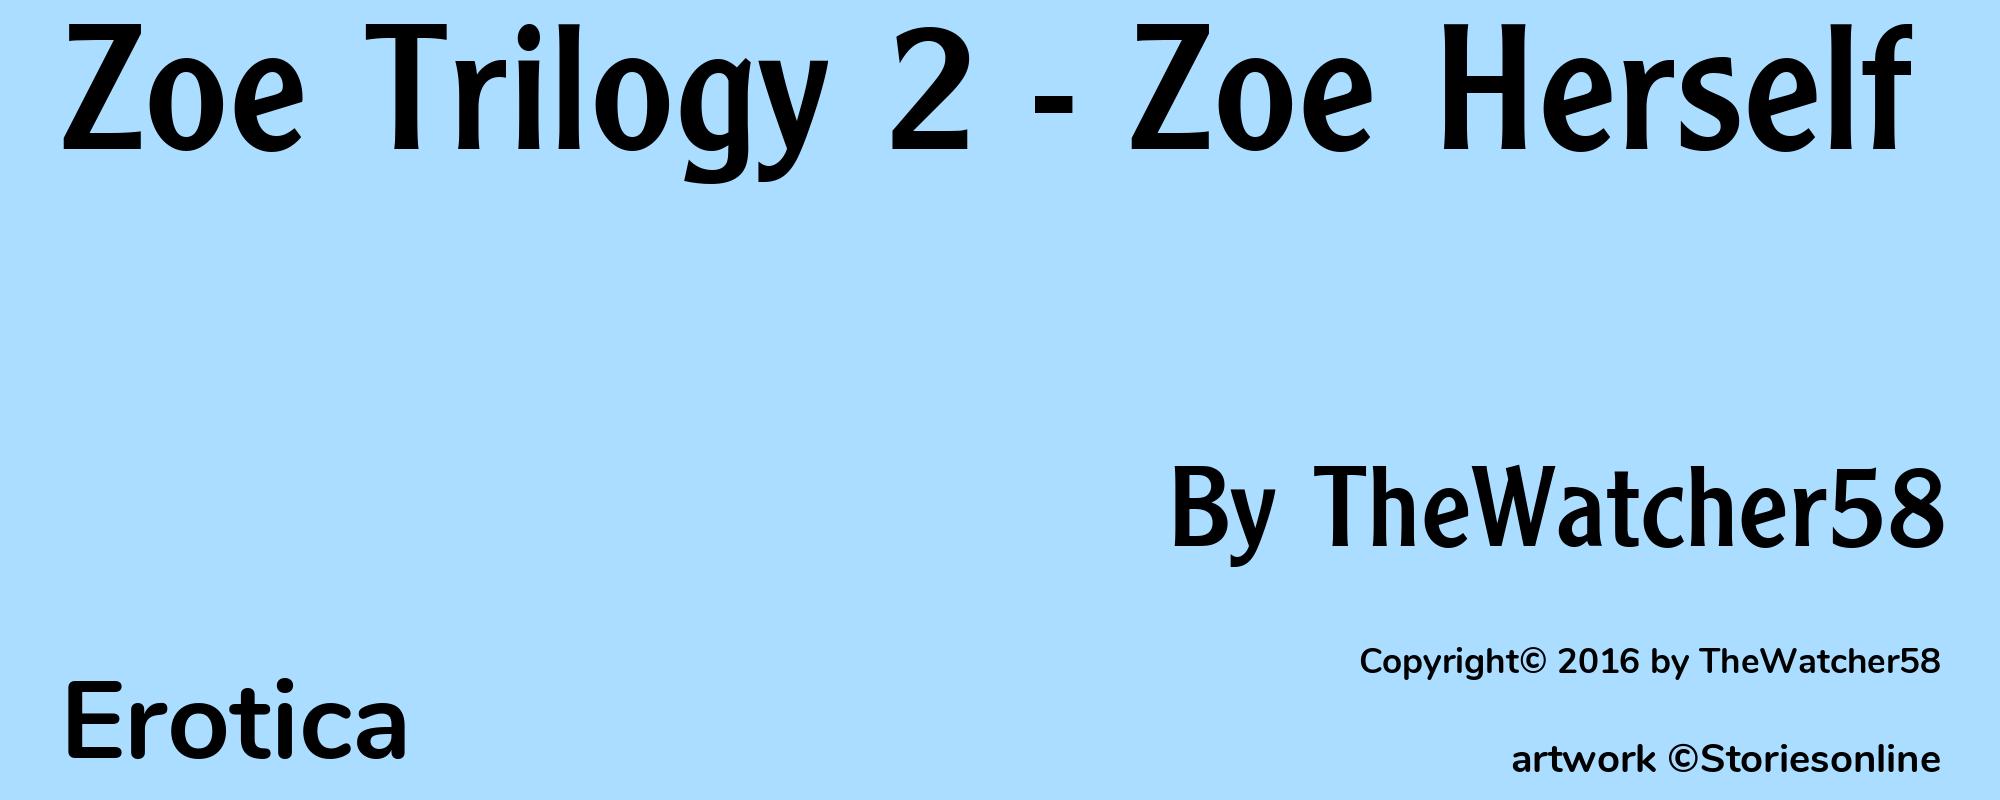 Zoe Trilogy 2 - Zoe Herself - Cover